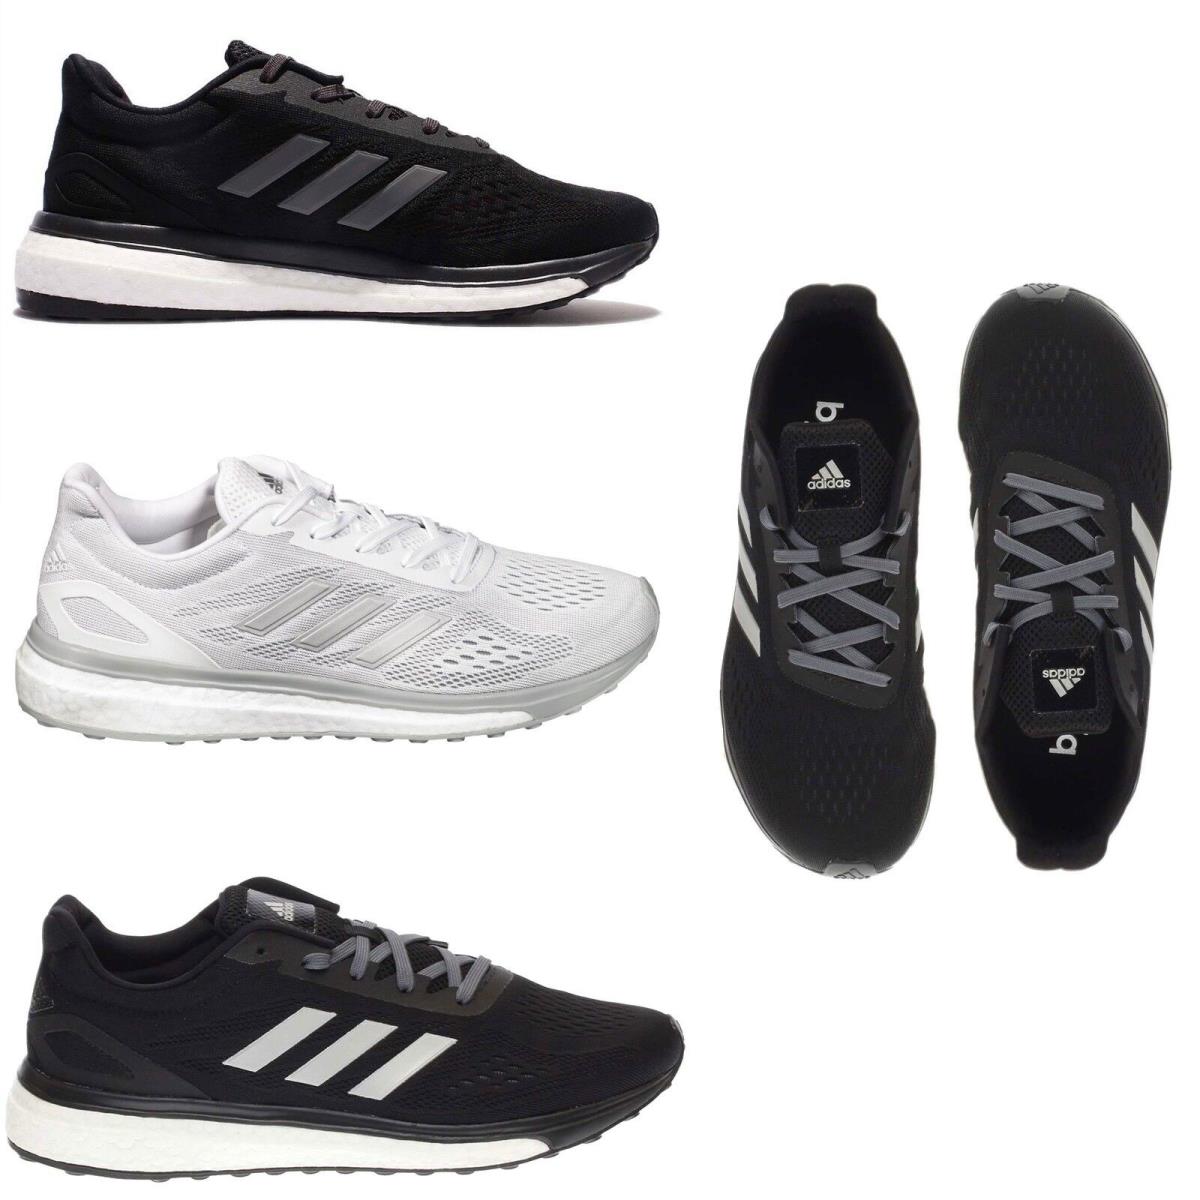 Adidas Women Athletic Shoes Response LT W Running Shoes Black - Black